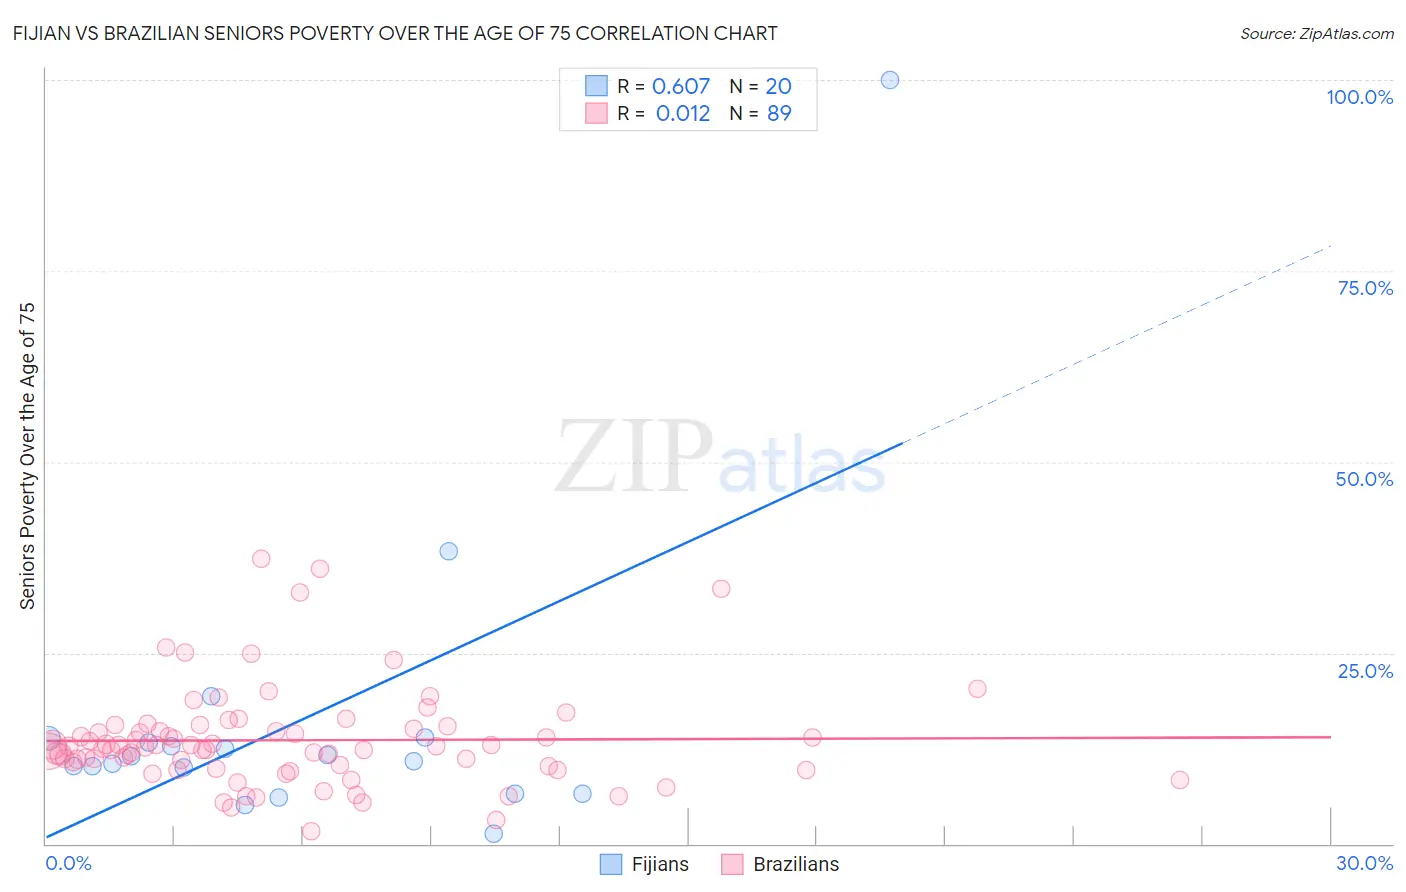 Fijian vs Brazilian Seniors Poverty Over the Age of 75